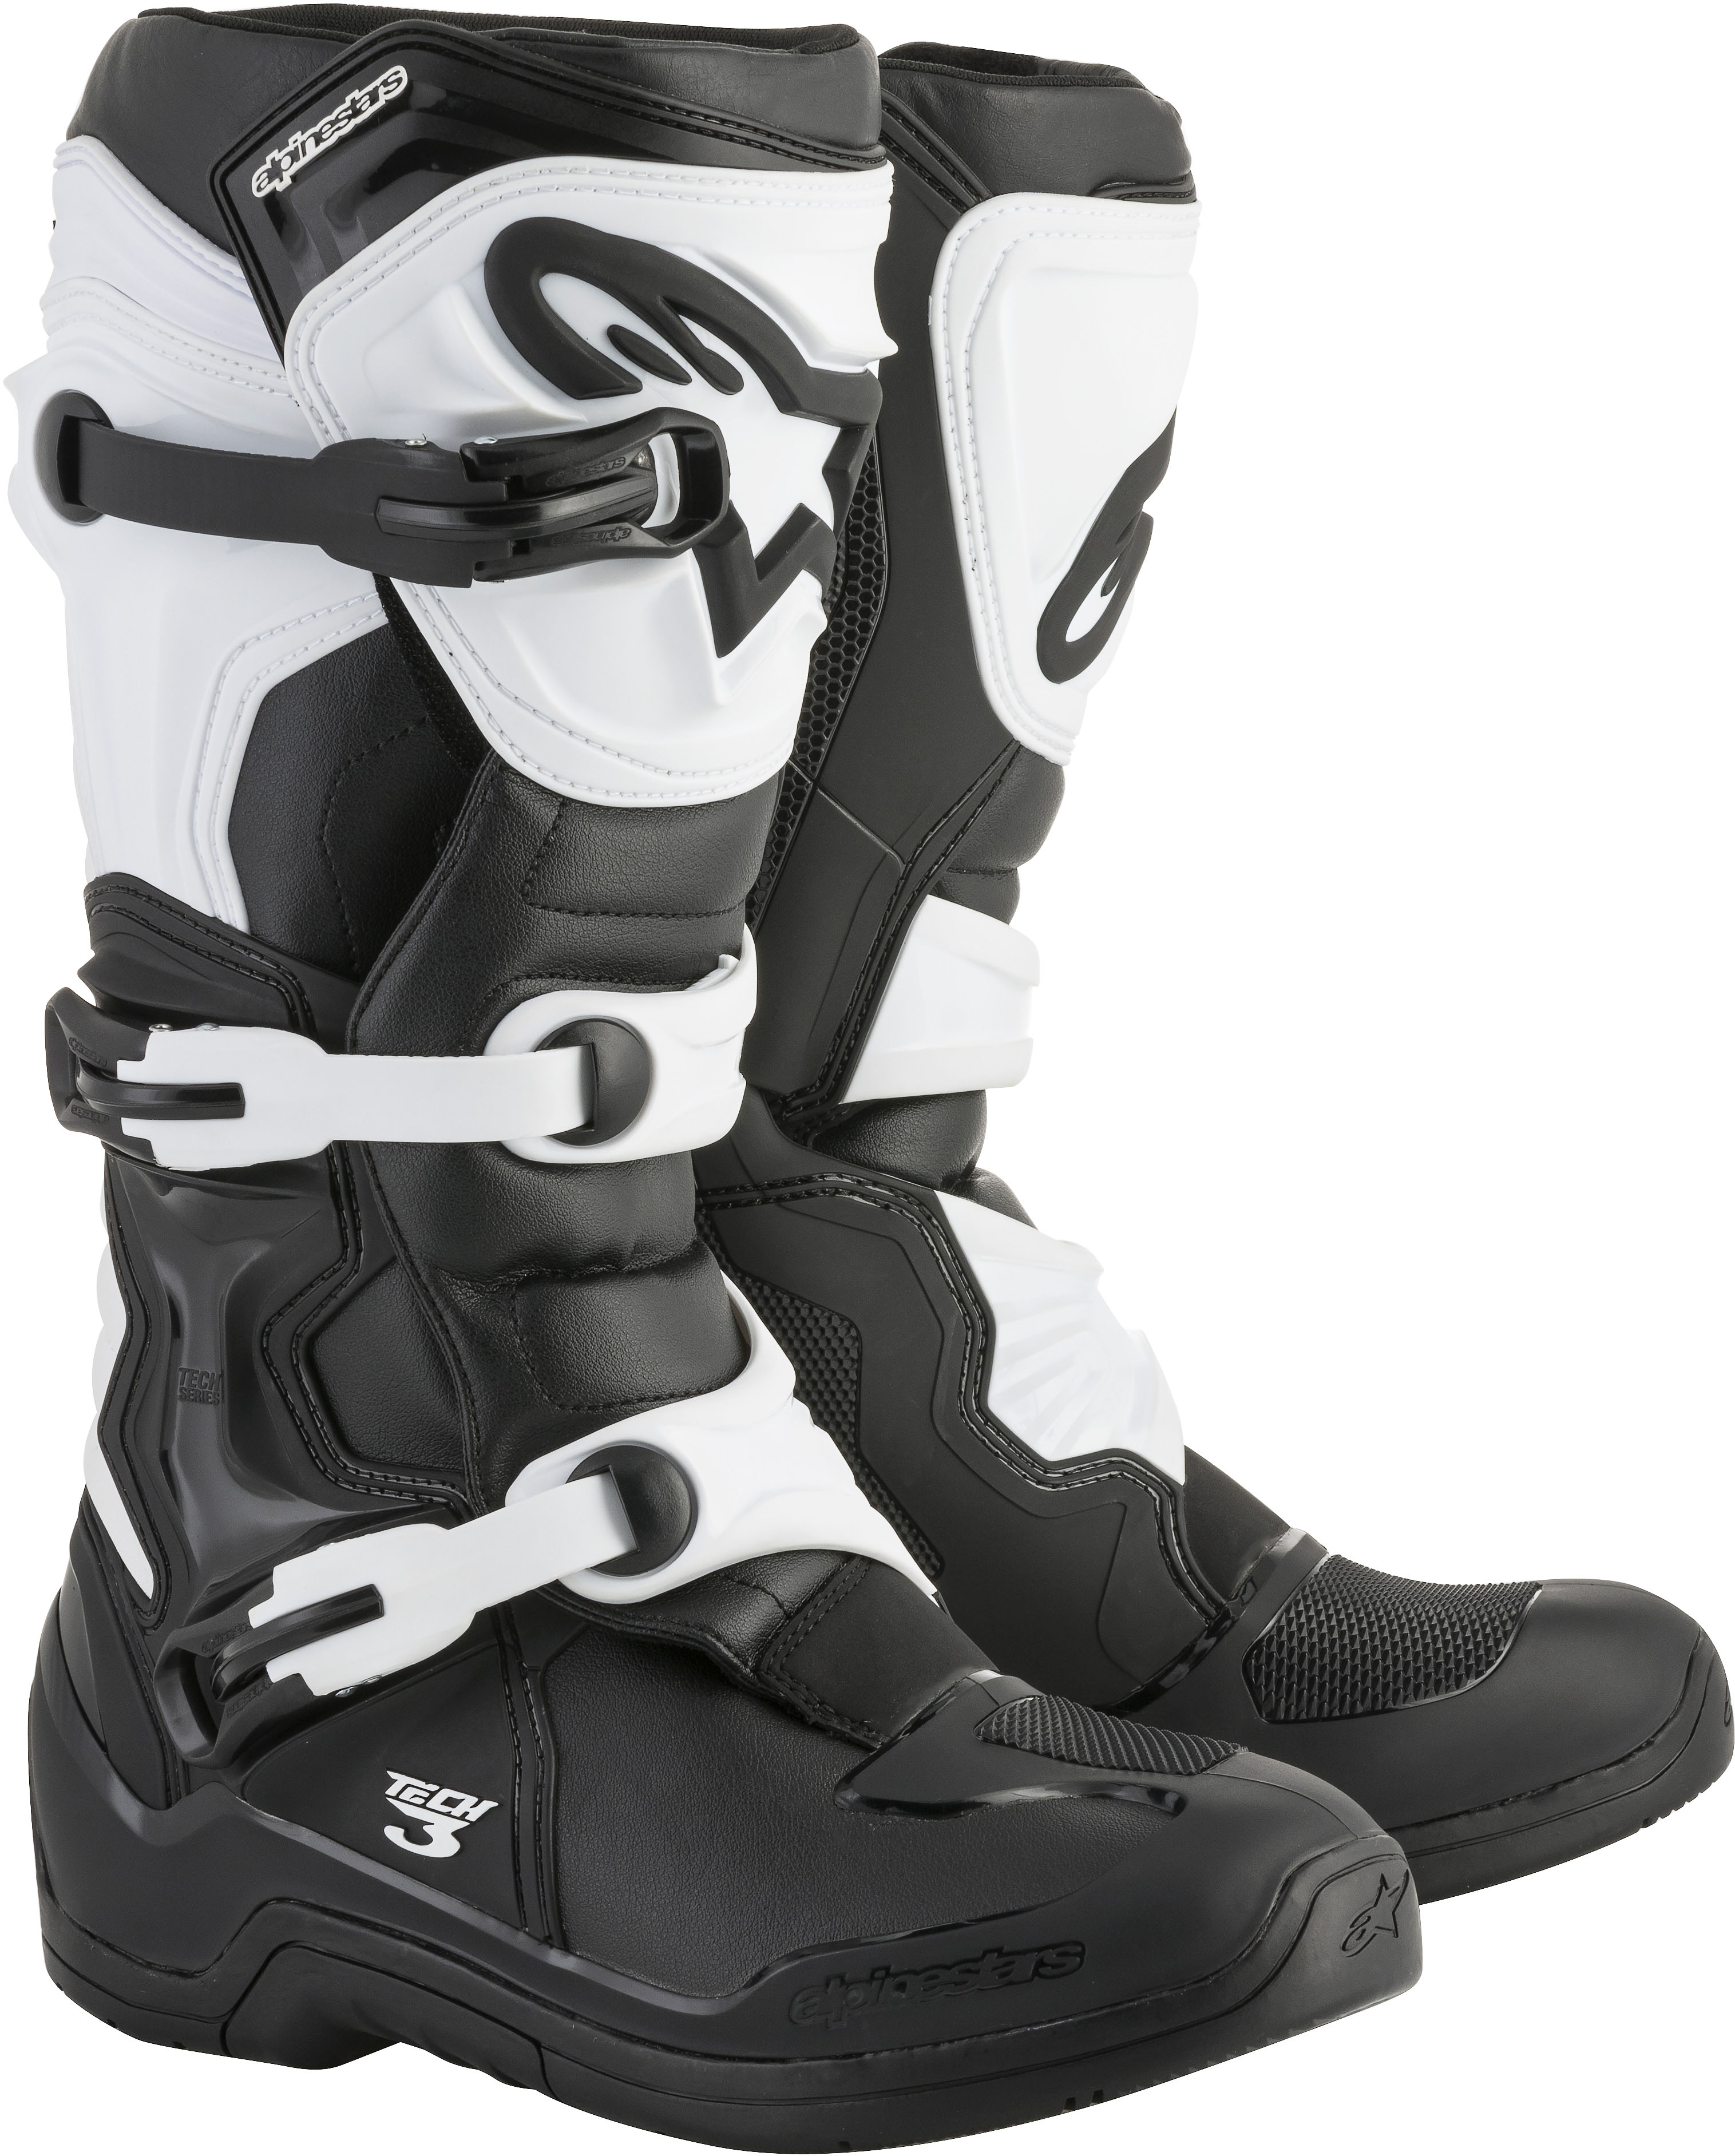 Tech 3 Boots Black/White Size 8 - Click Image to Close